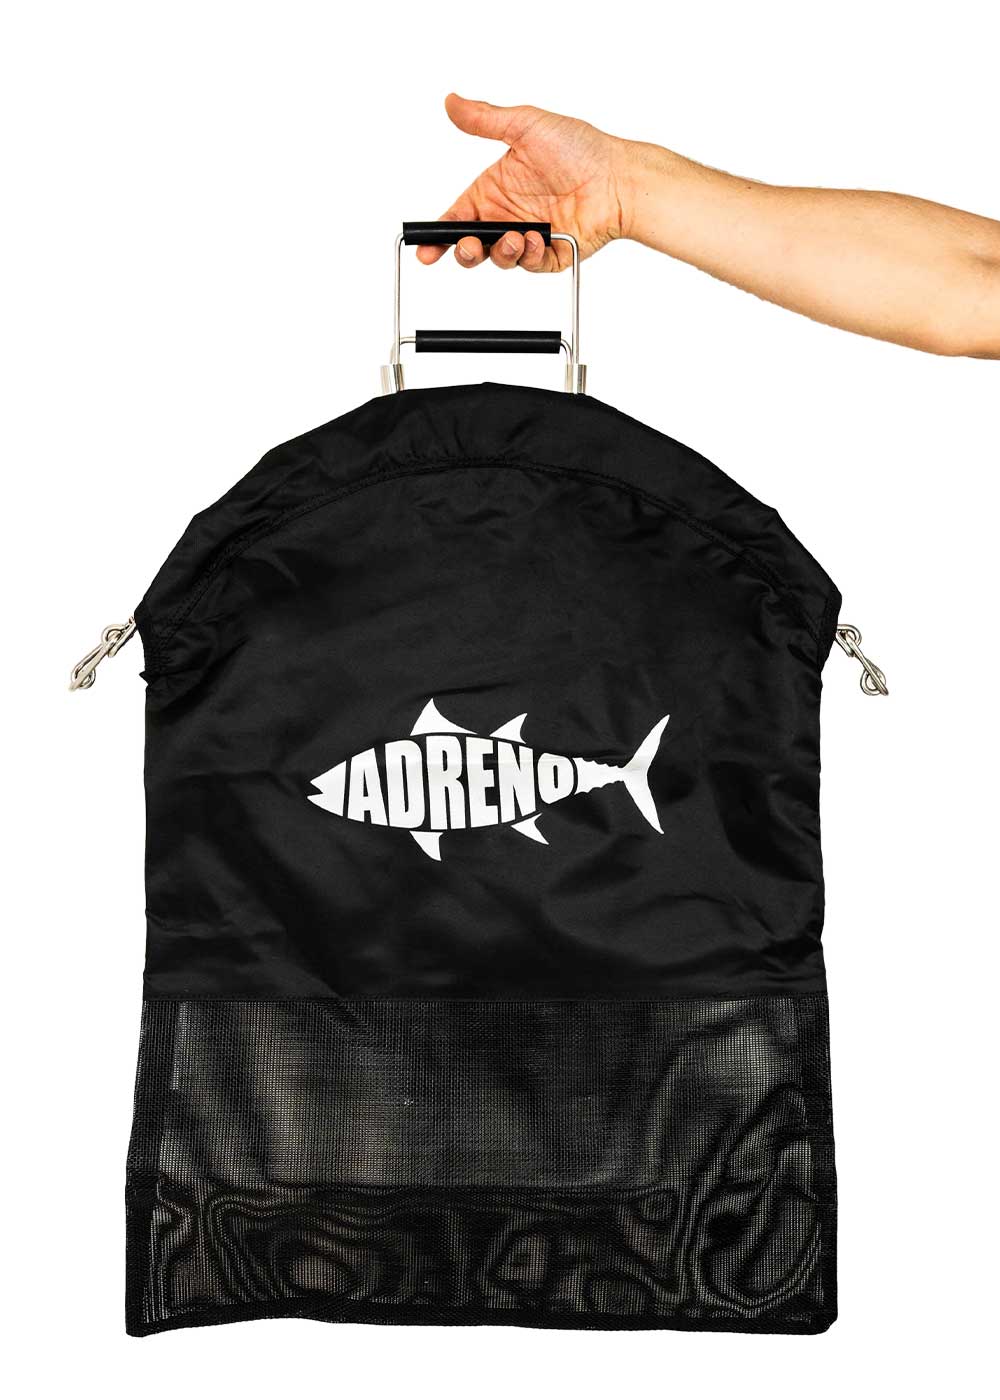 Rob Allen Heavy Duty Fish Cooler Bag